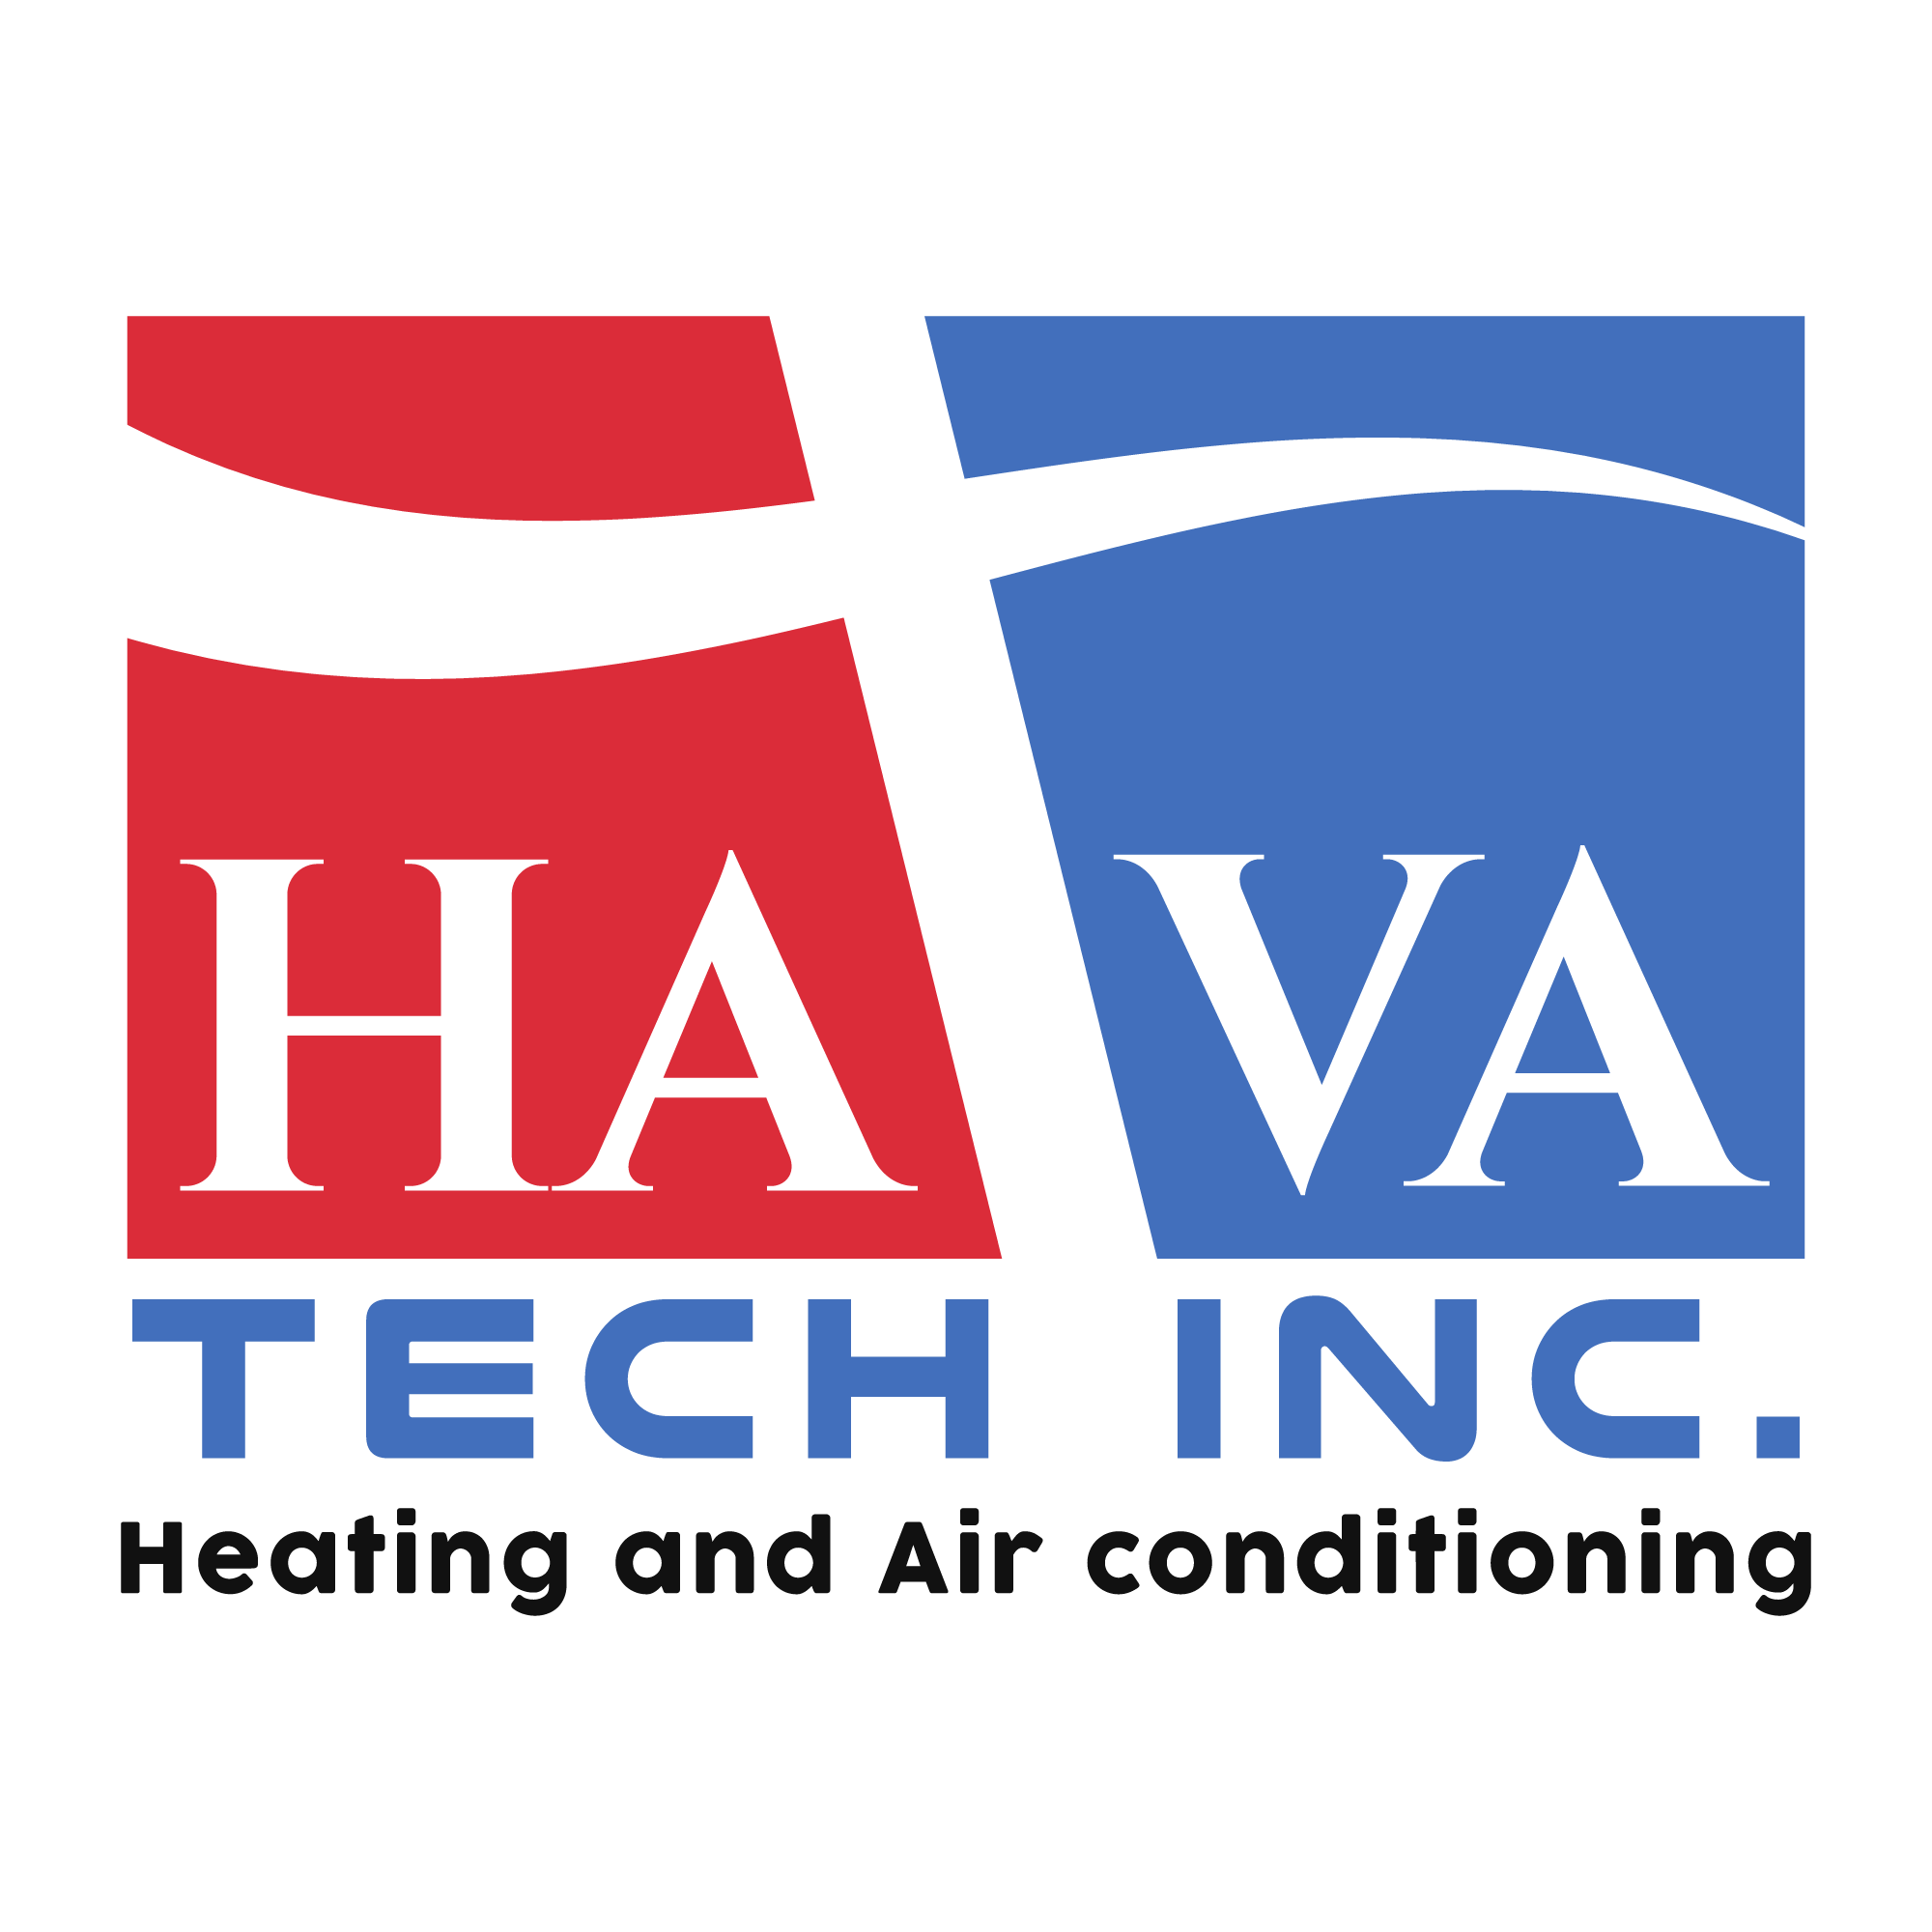 HAVA Tech INC